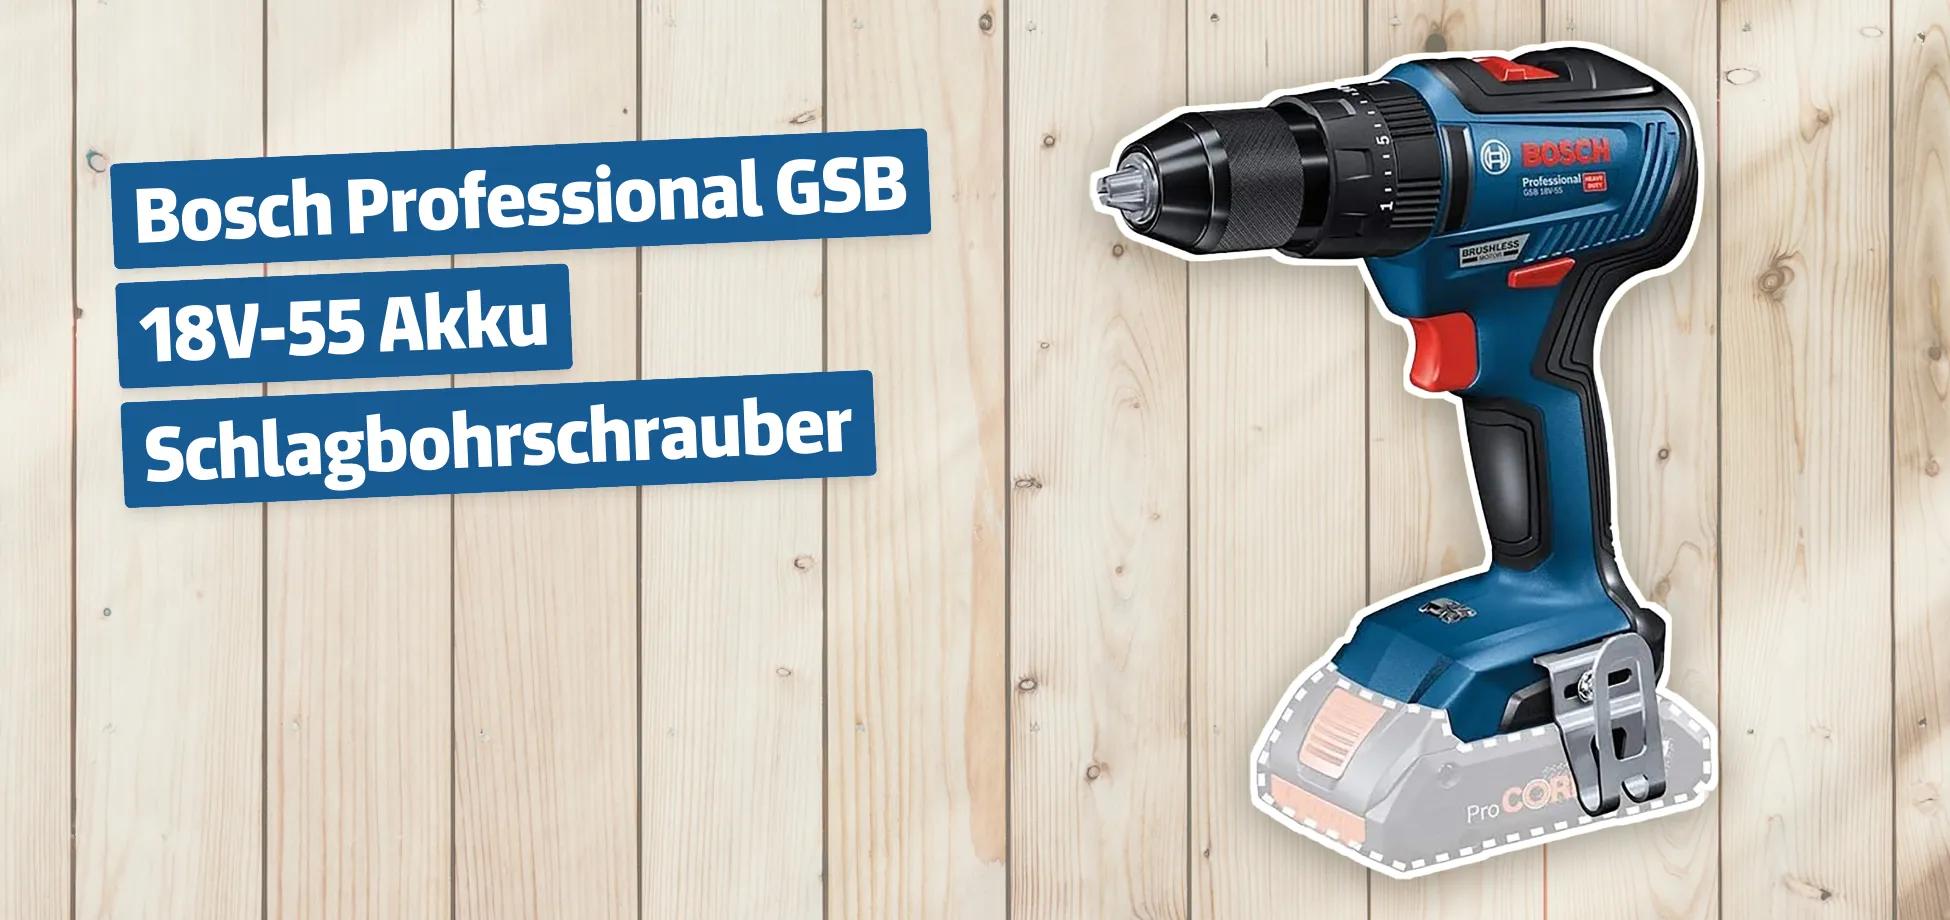 Bosch Professional GSB 18V-55 Akku Schlagbohrschrauber